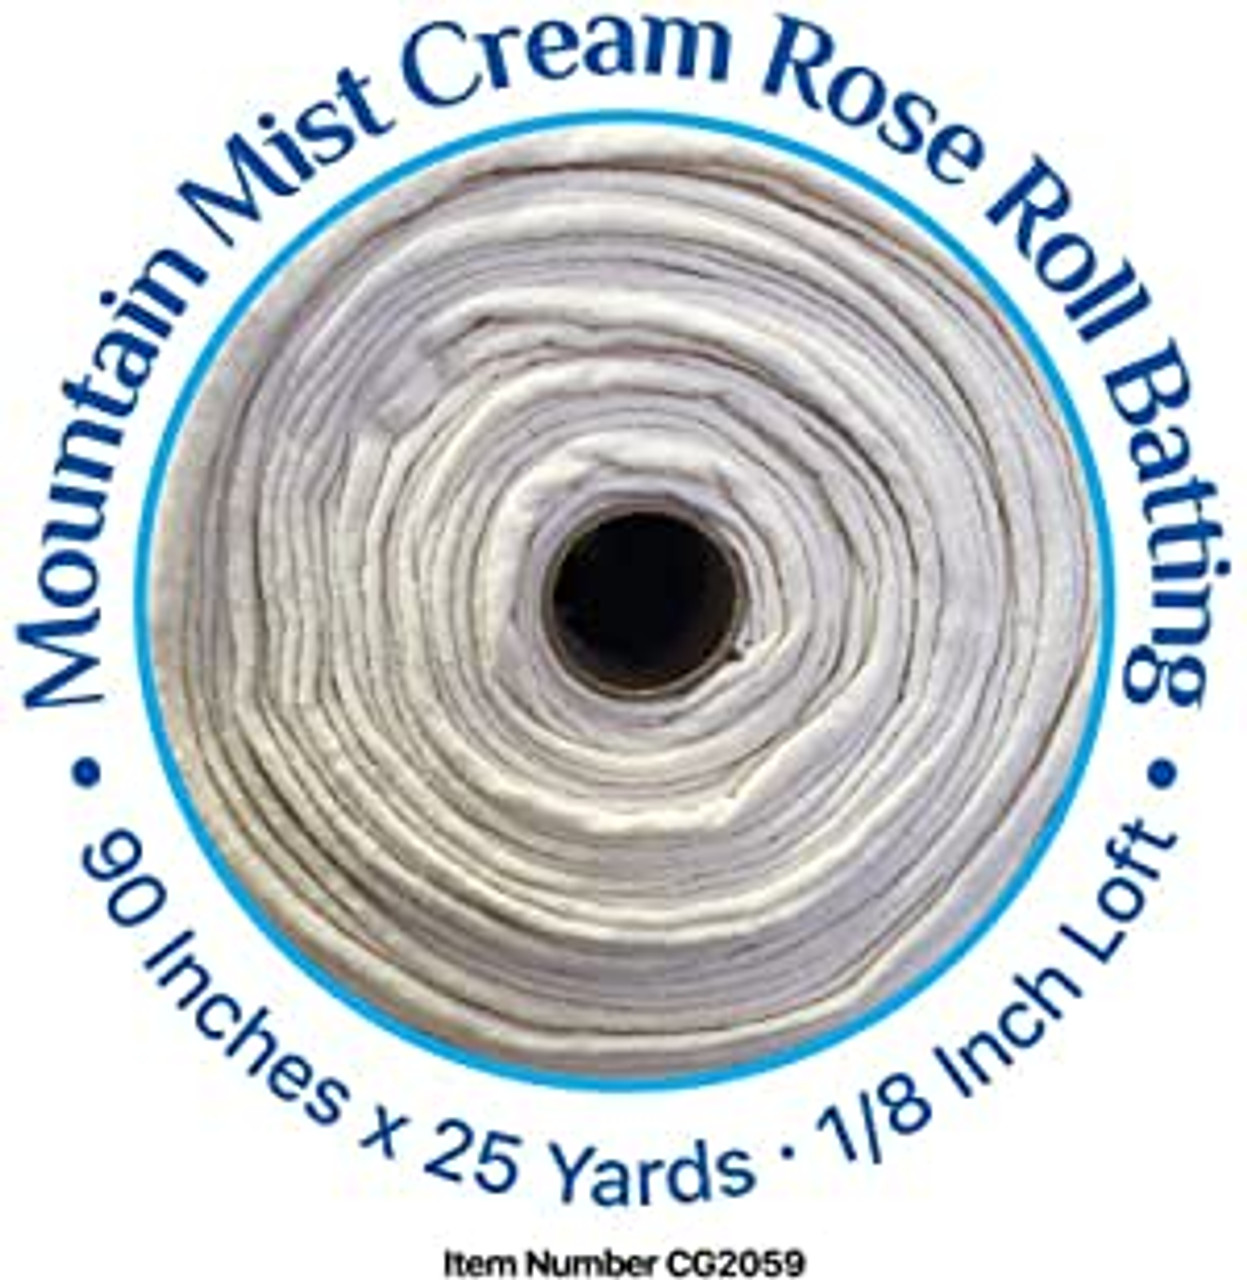 Mountain Mist Cream Rose Cotton Needlepunch Batting-Twin Size 72